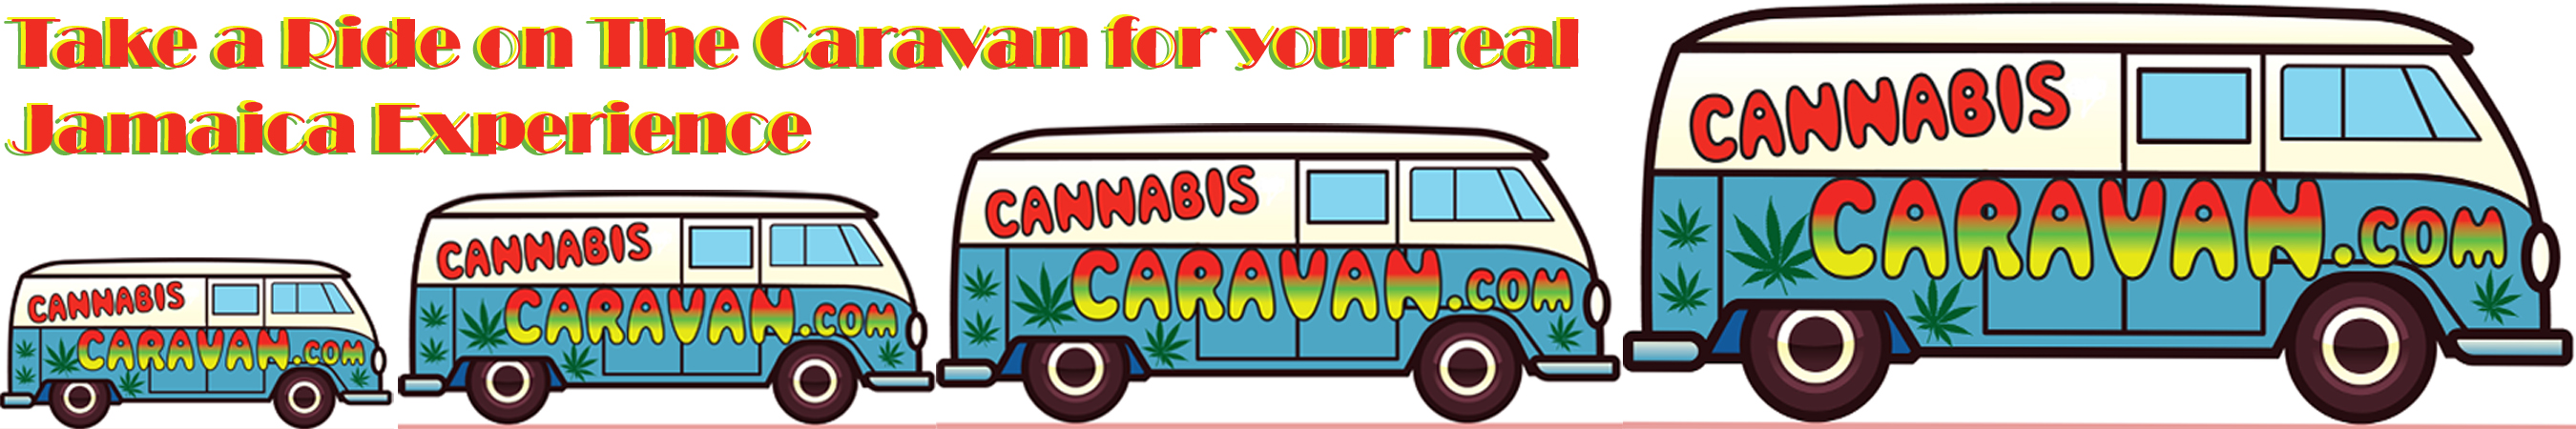 cannabiscaravan.com